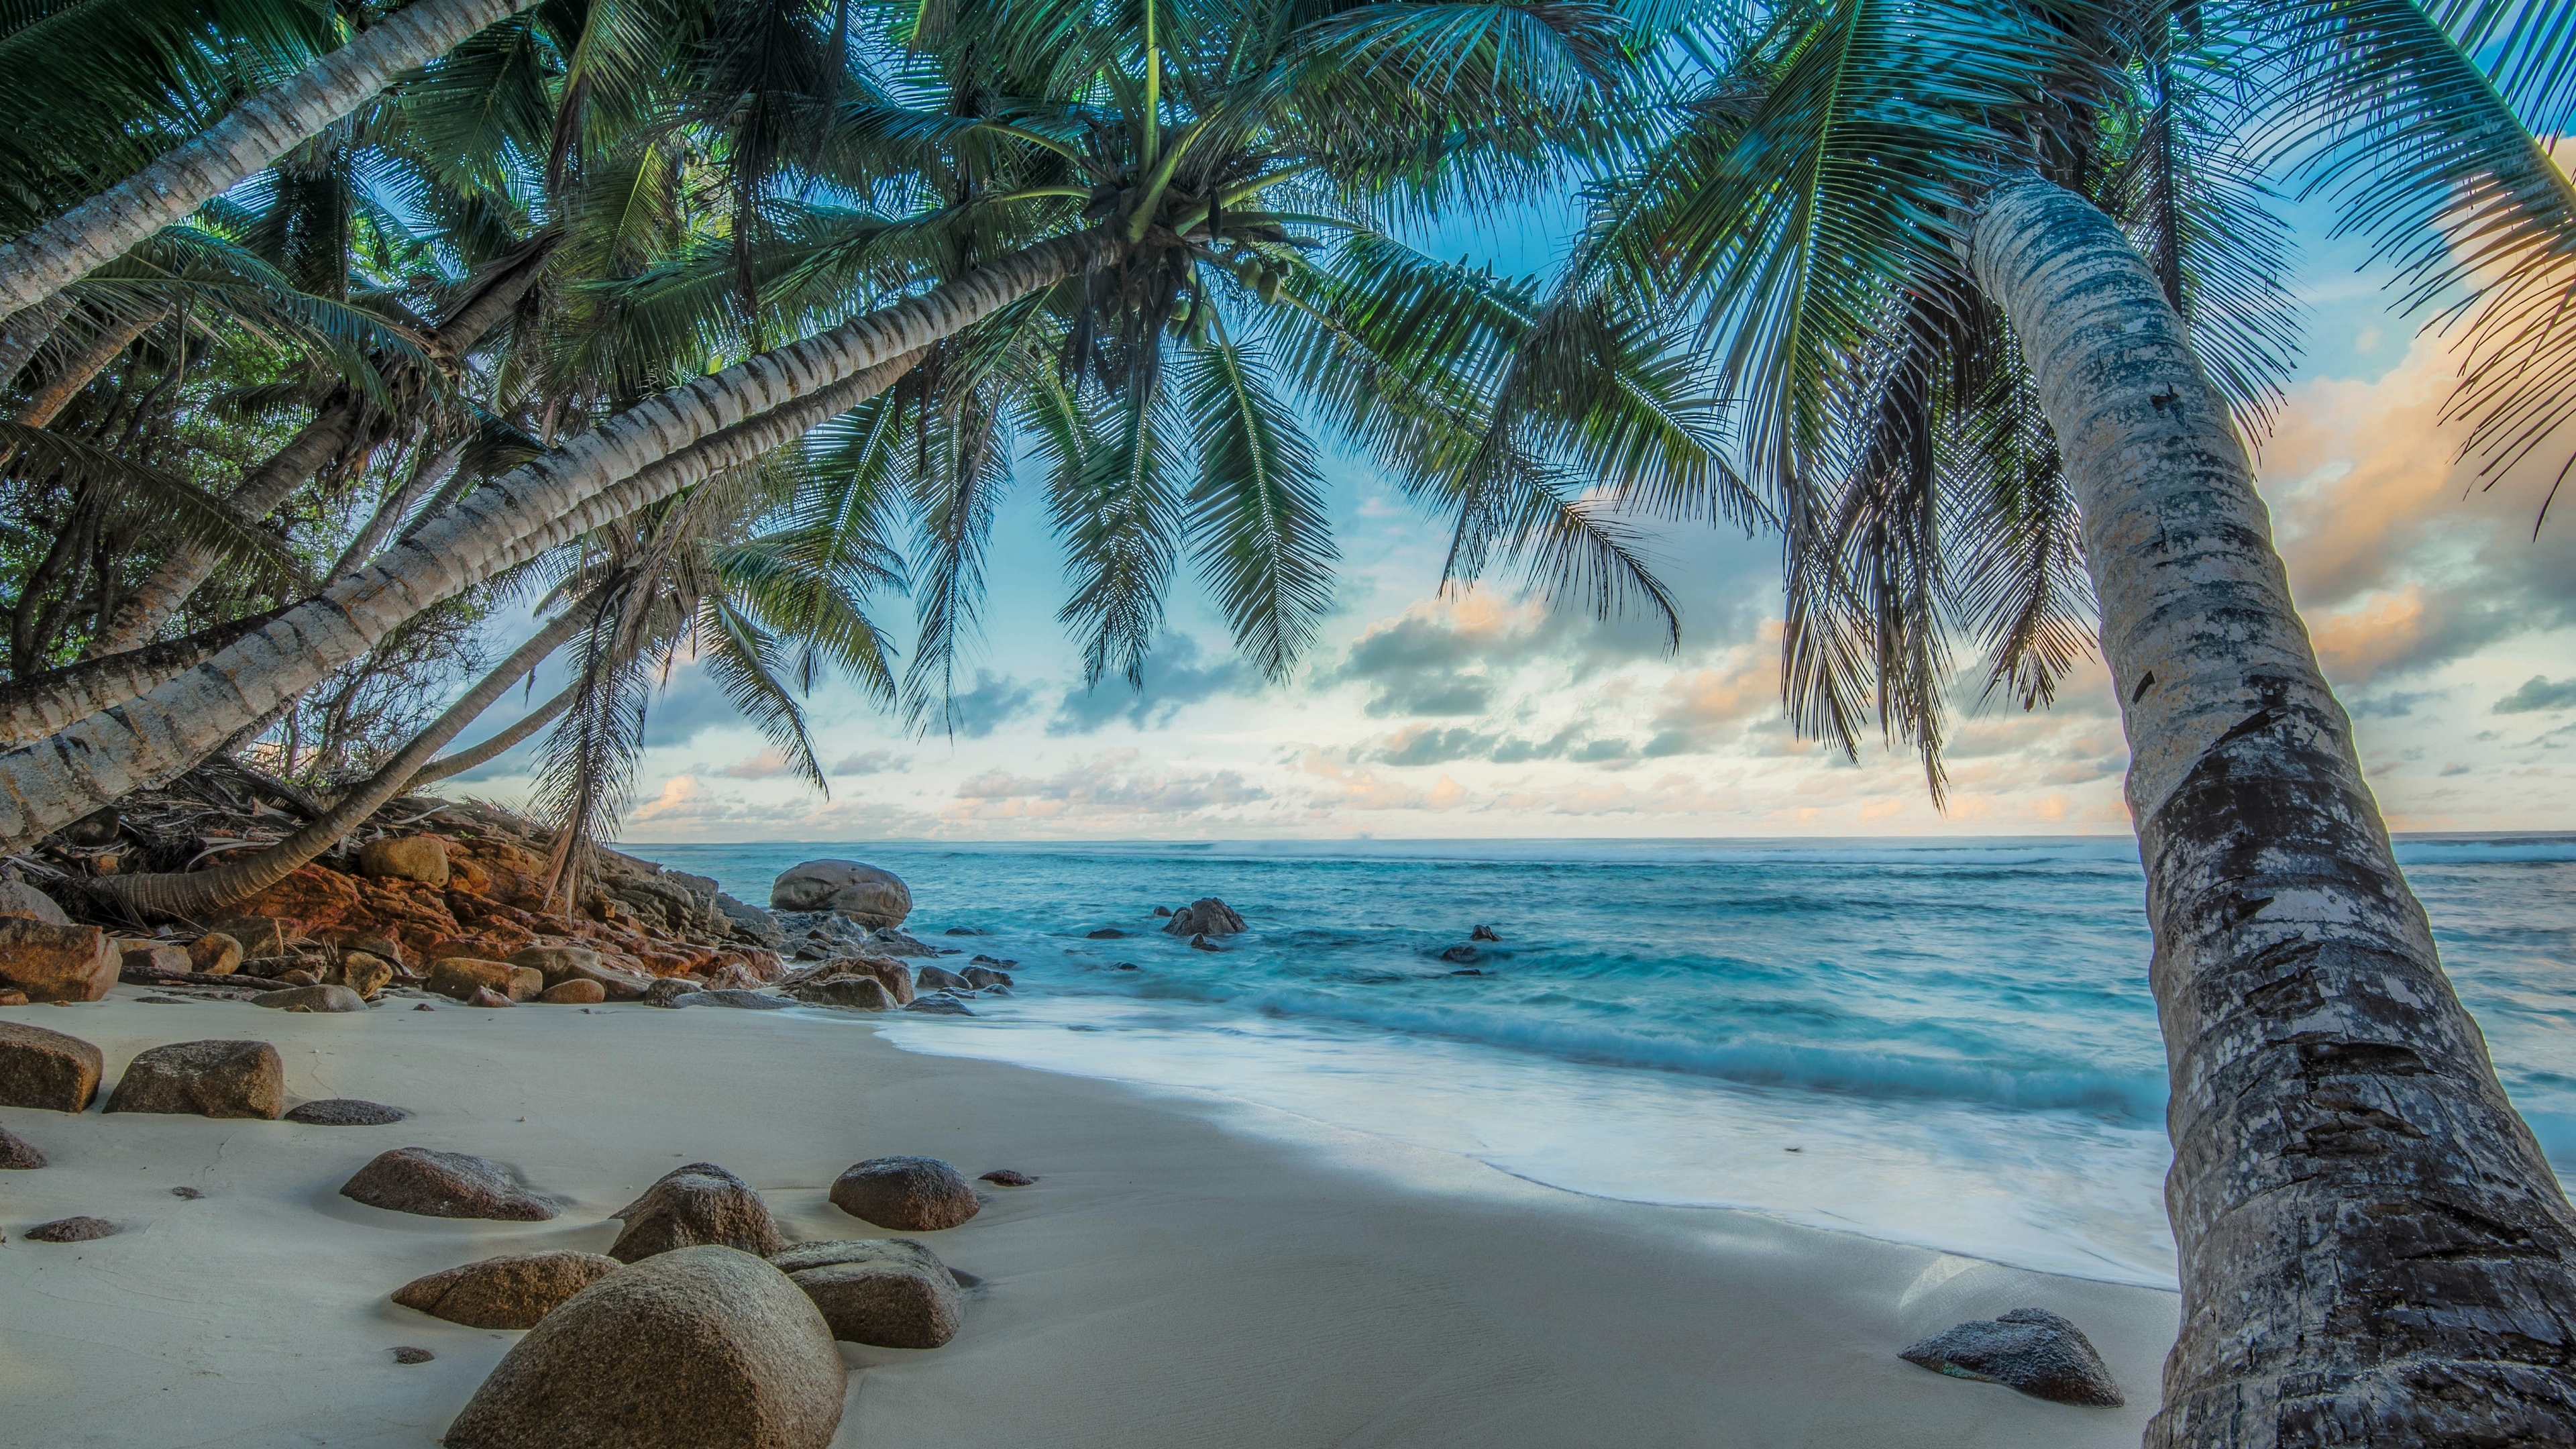 Nature Beach Sea Palm Trees Tropics Island Stones Sky Waves Clouds Water 3840x2160